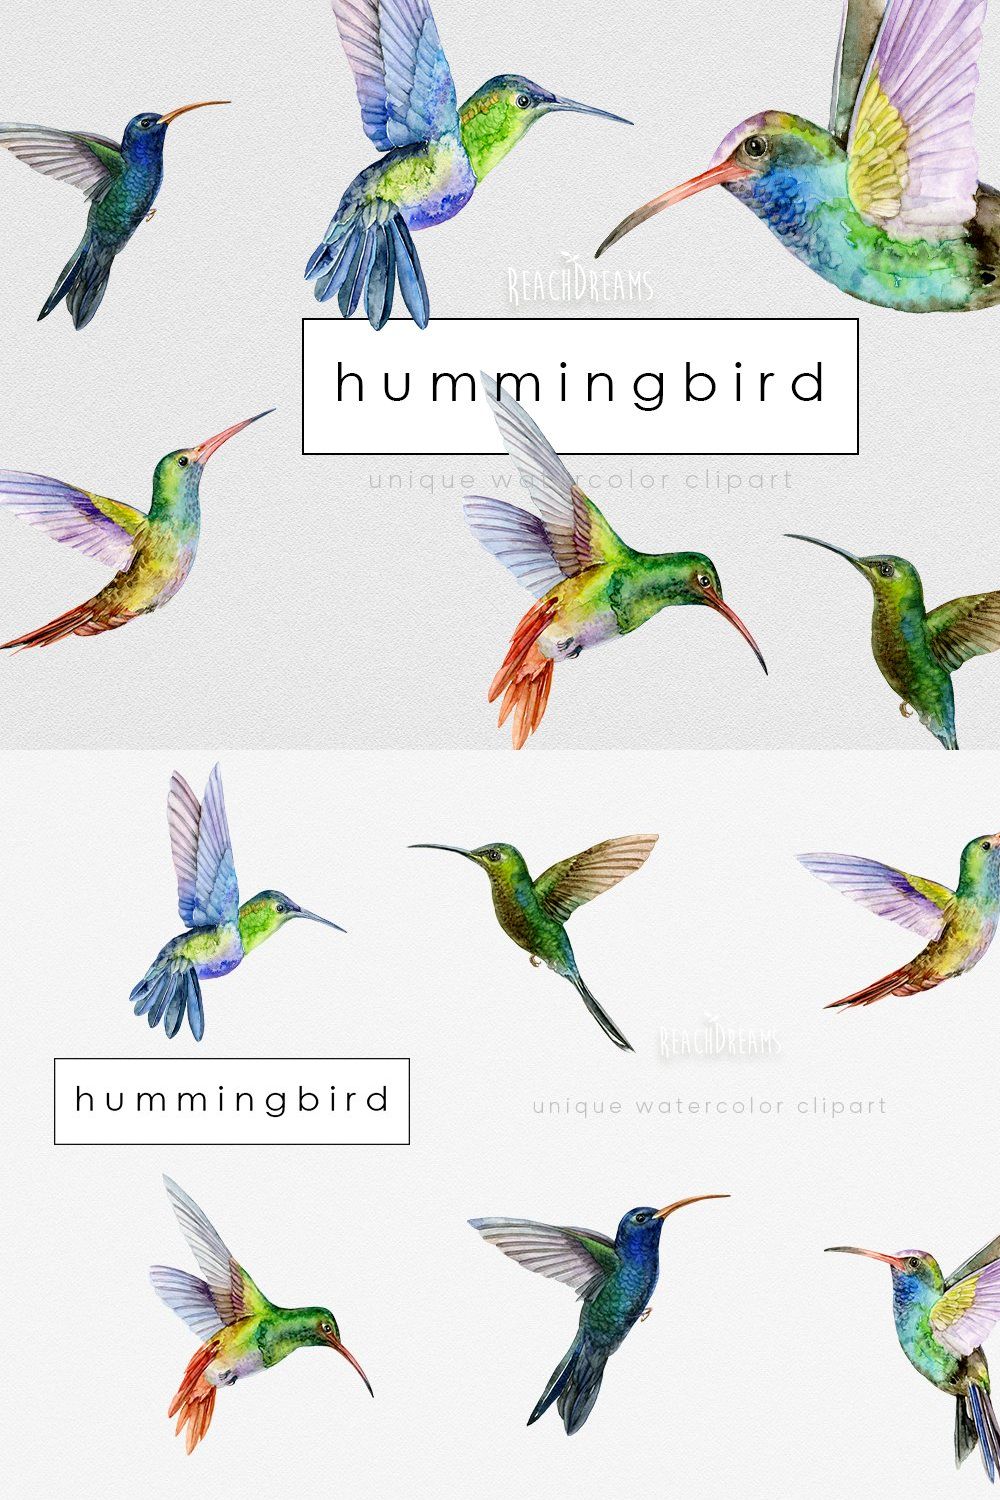 Hummingbird Birds Collection pinterest preview image.